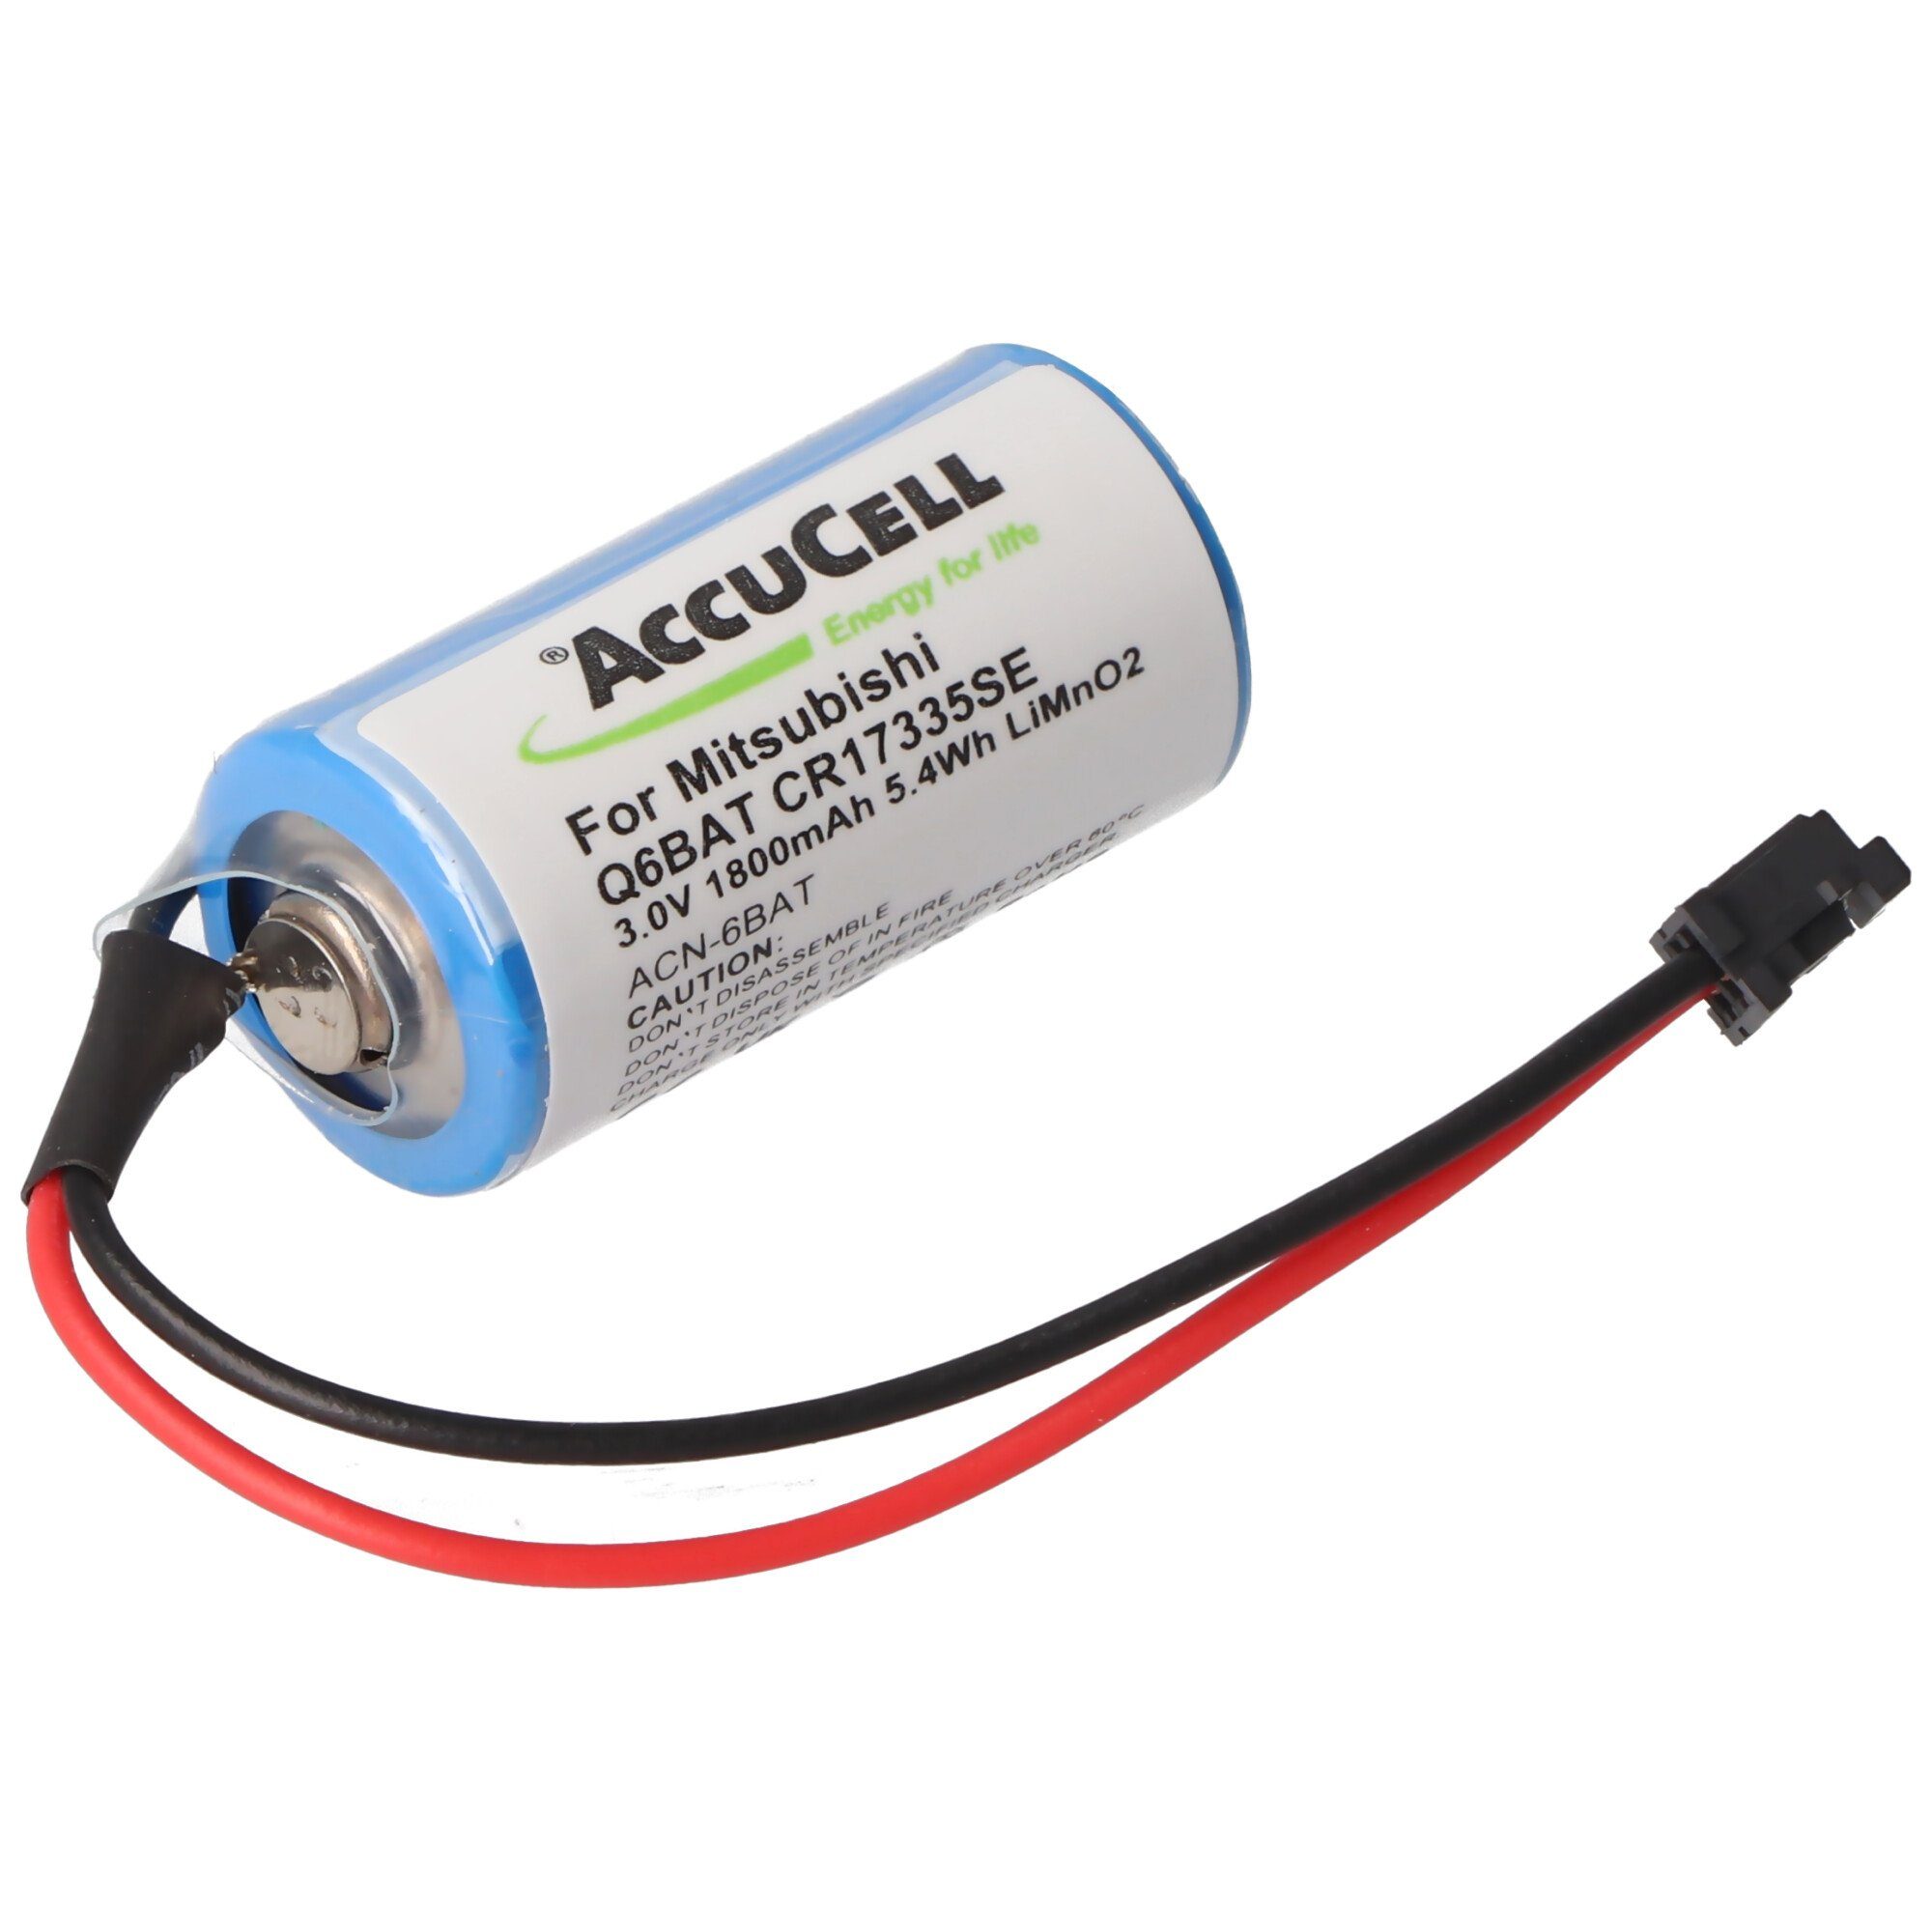 AccuCell Batterie passend für Mitsubishi Q6BAT CR17335SE, Q02CPU Batterie, (3,0 V)